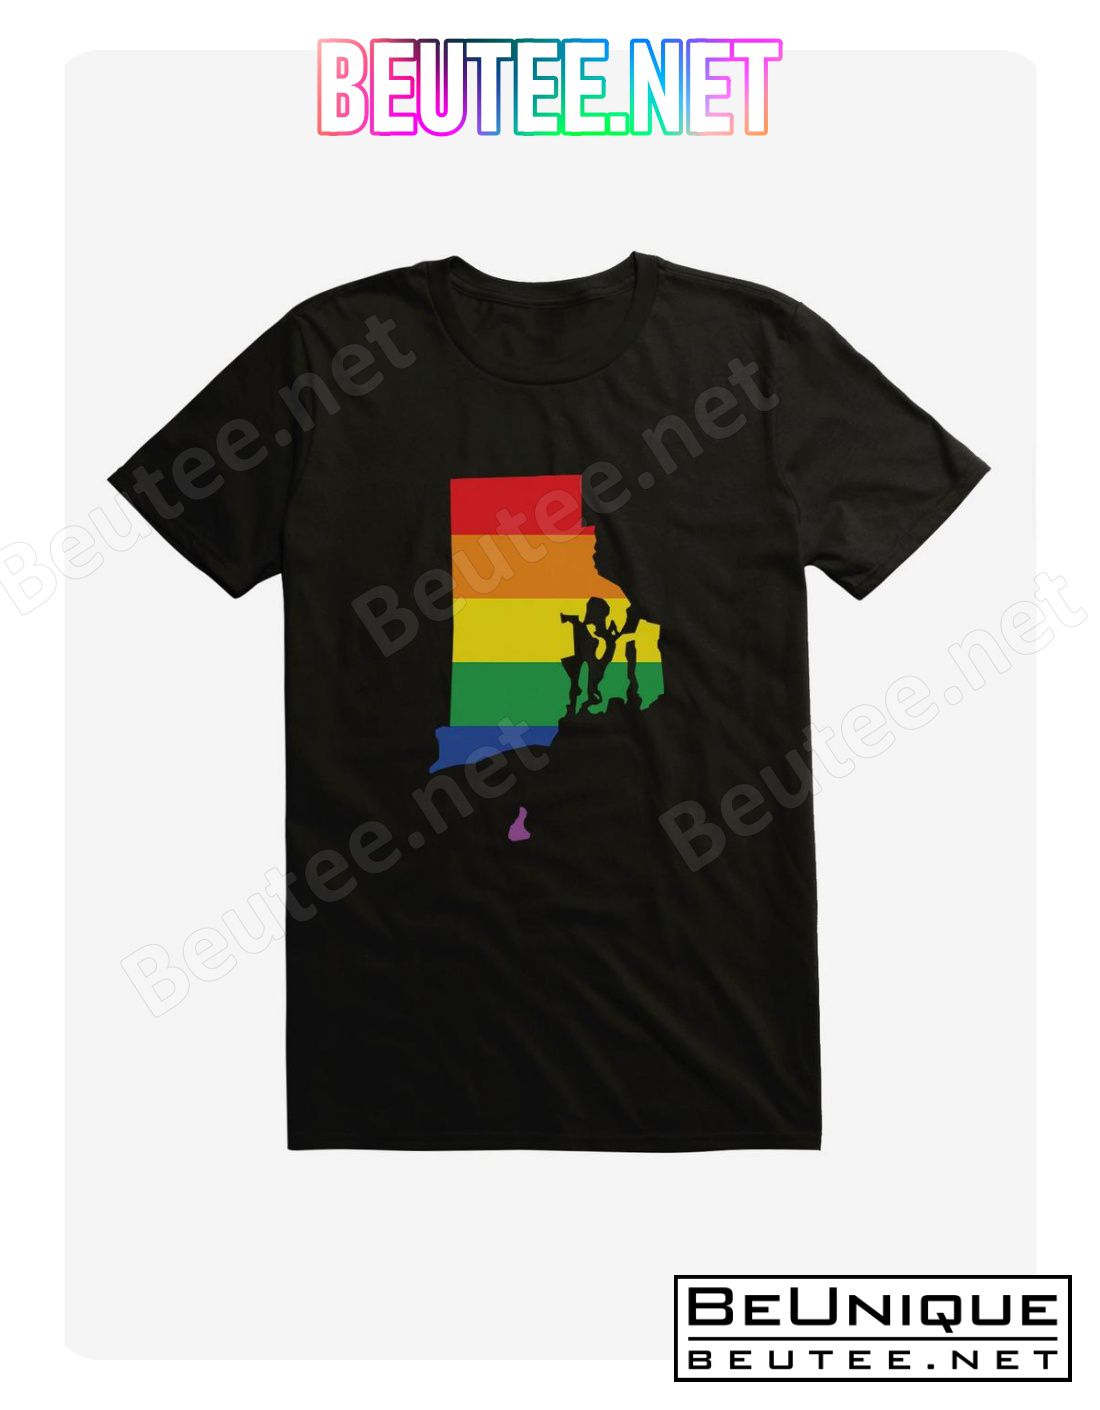 Pride State Flag Rhode Island T-Shirt